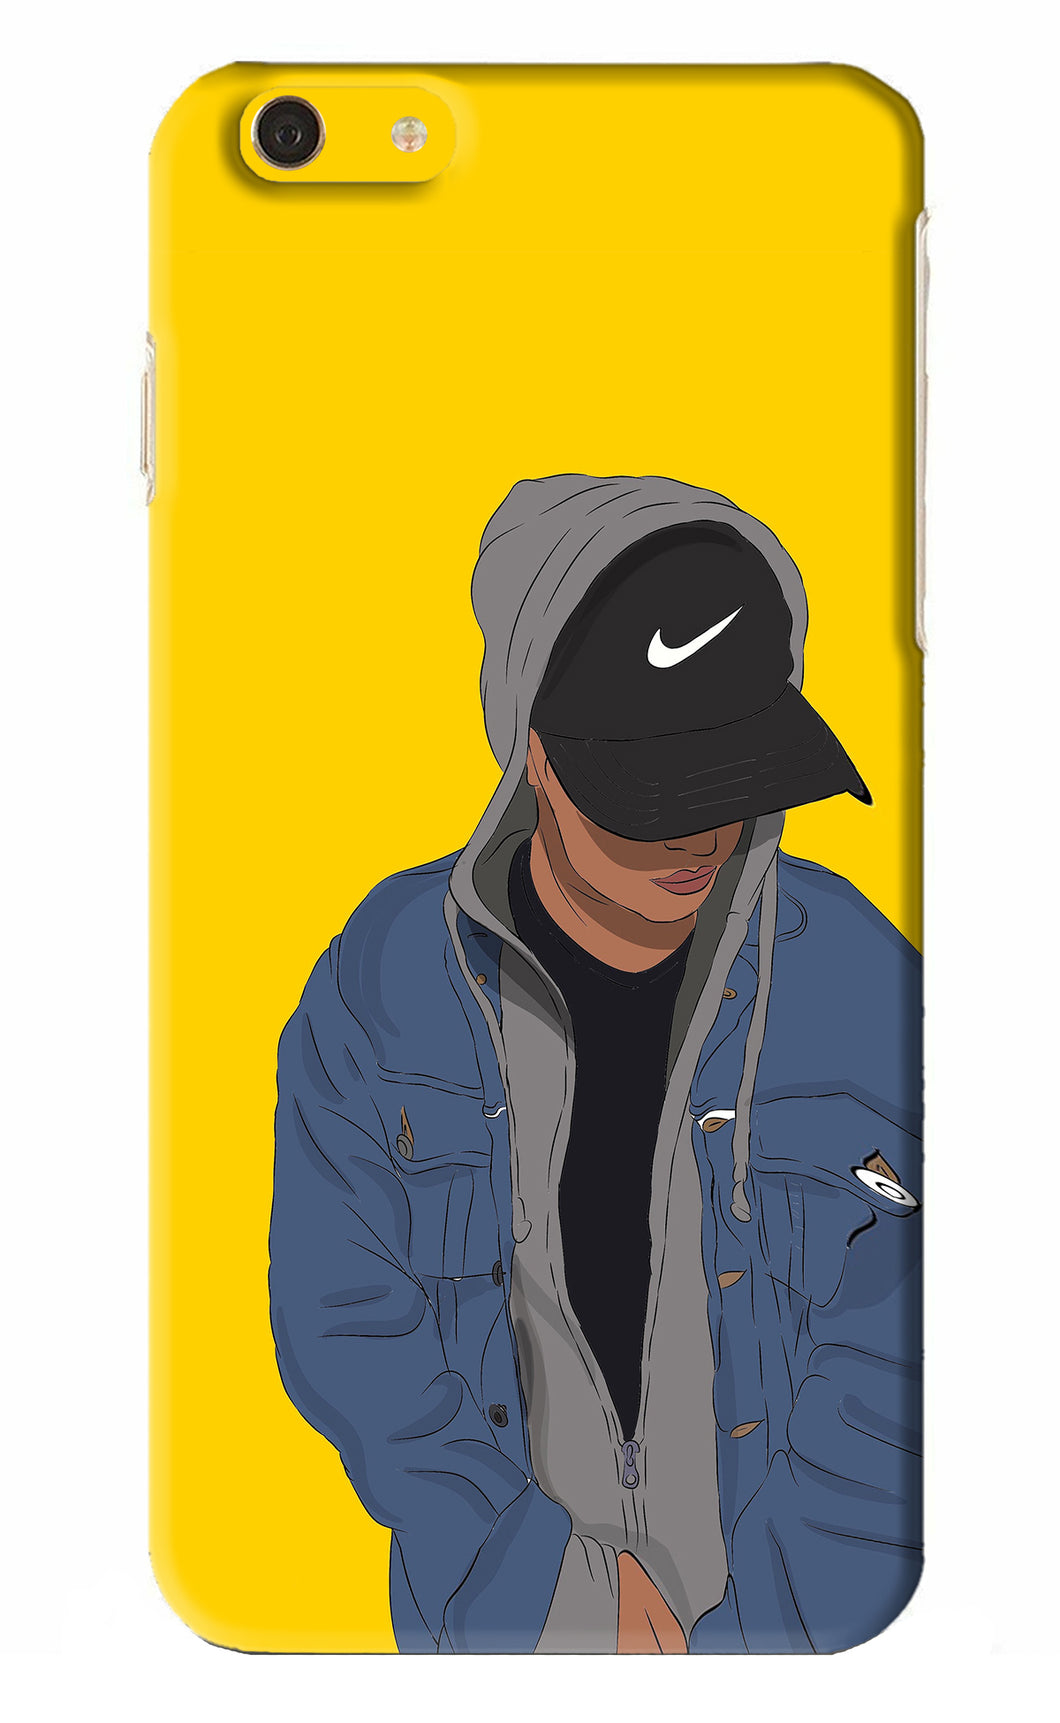 Nike Boy iPhone 6 Plus Back Skin Wrap